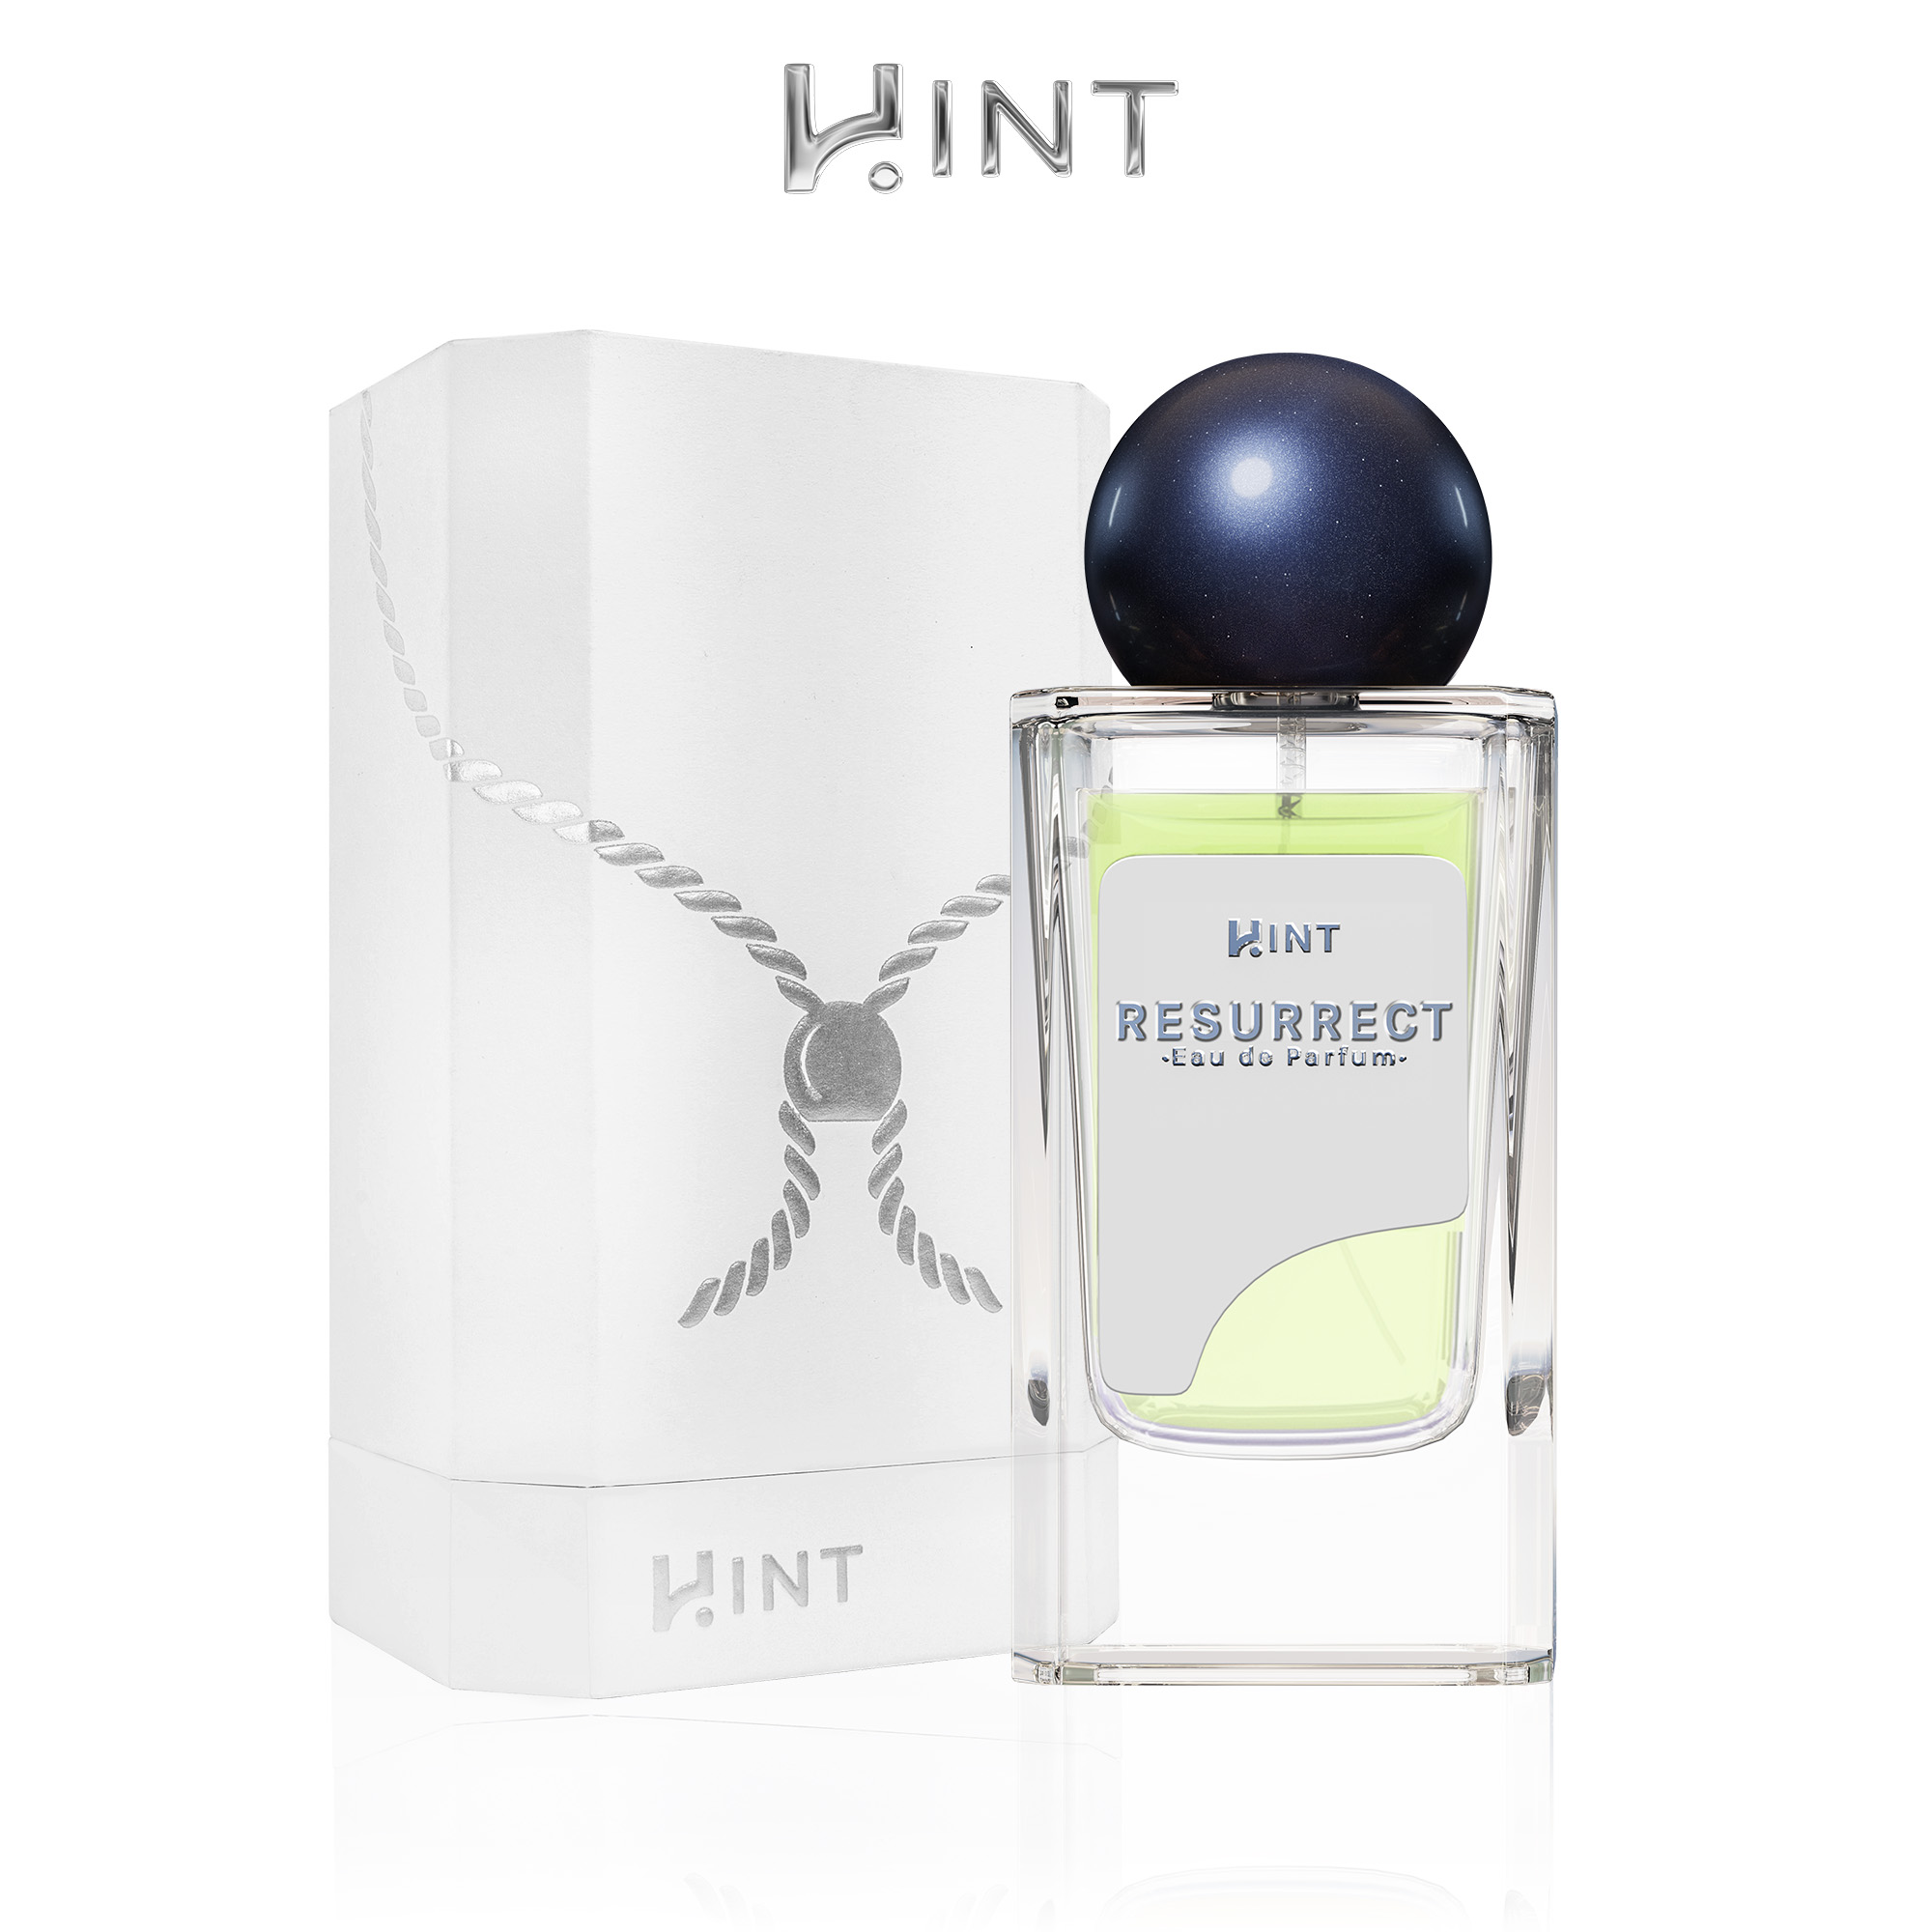 HINT Resurrect Eau de Parfum